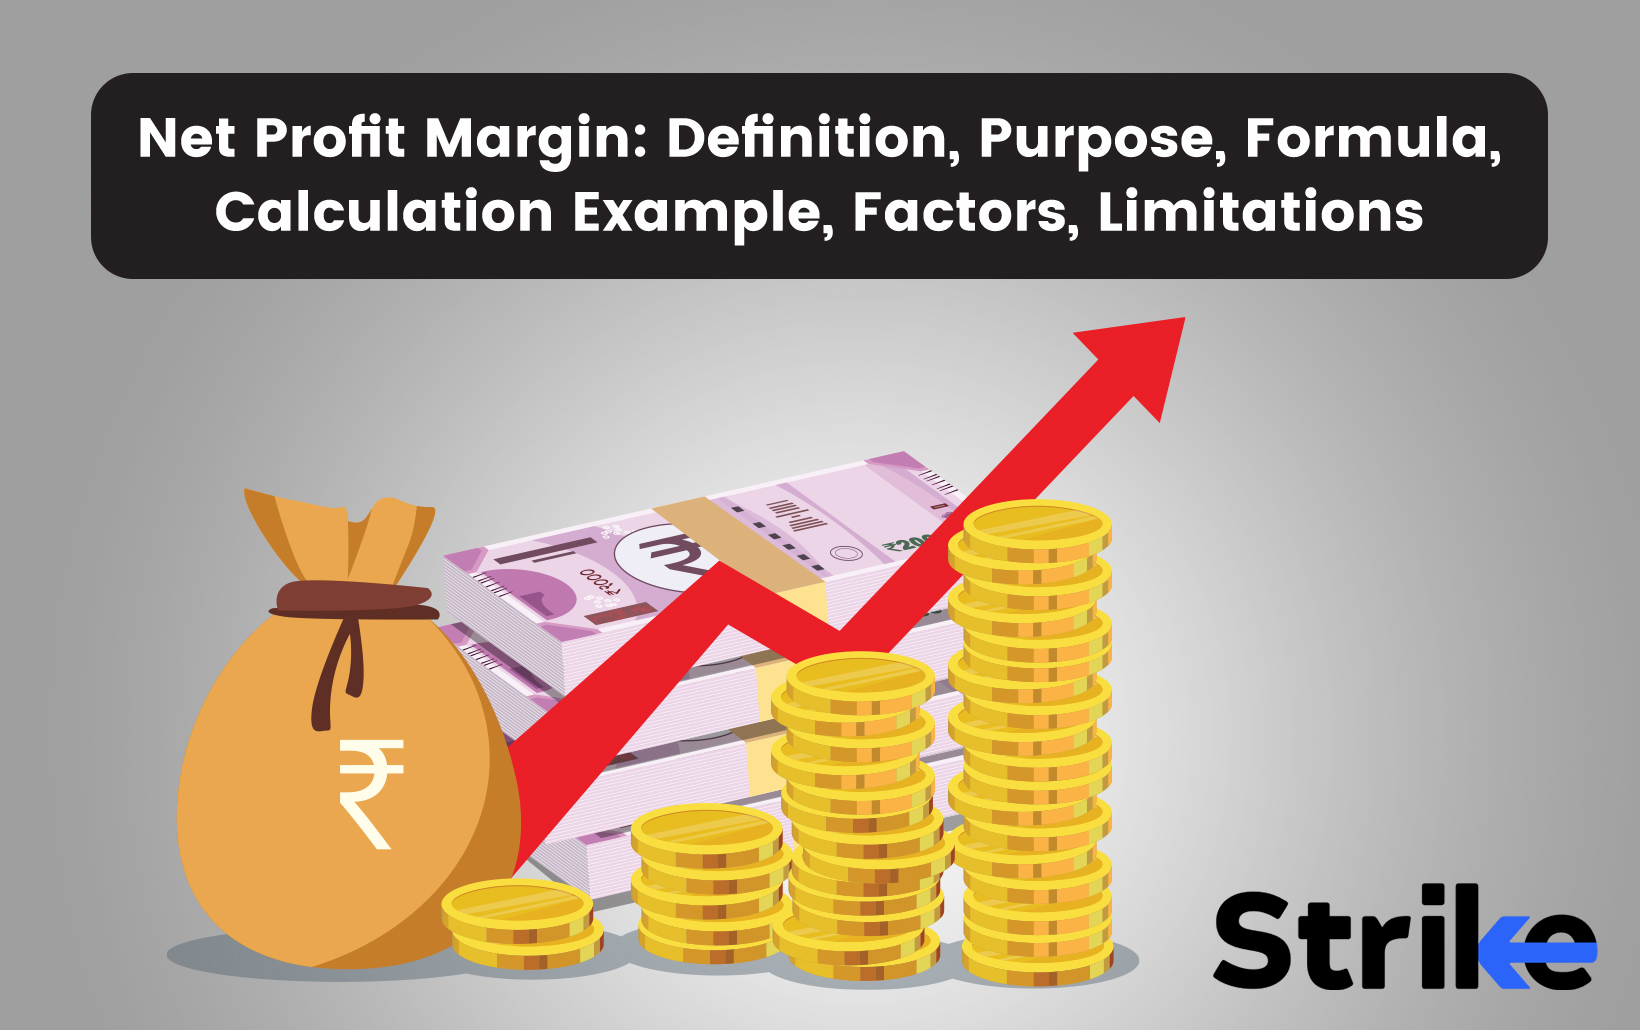 Net Profit Margin: Definition, Purpose, Formula, Calculation Example, Factors, Limitations